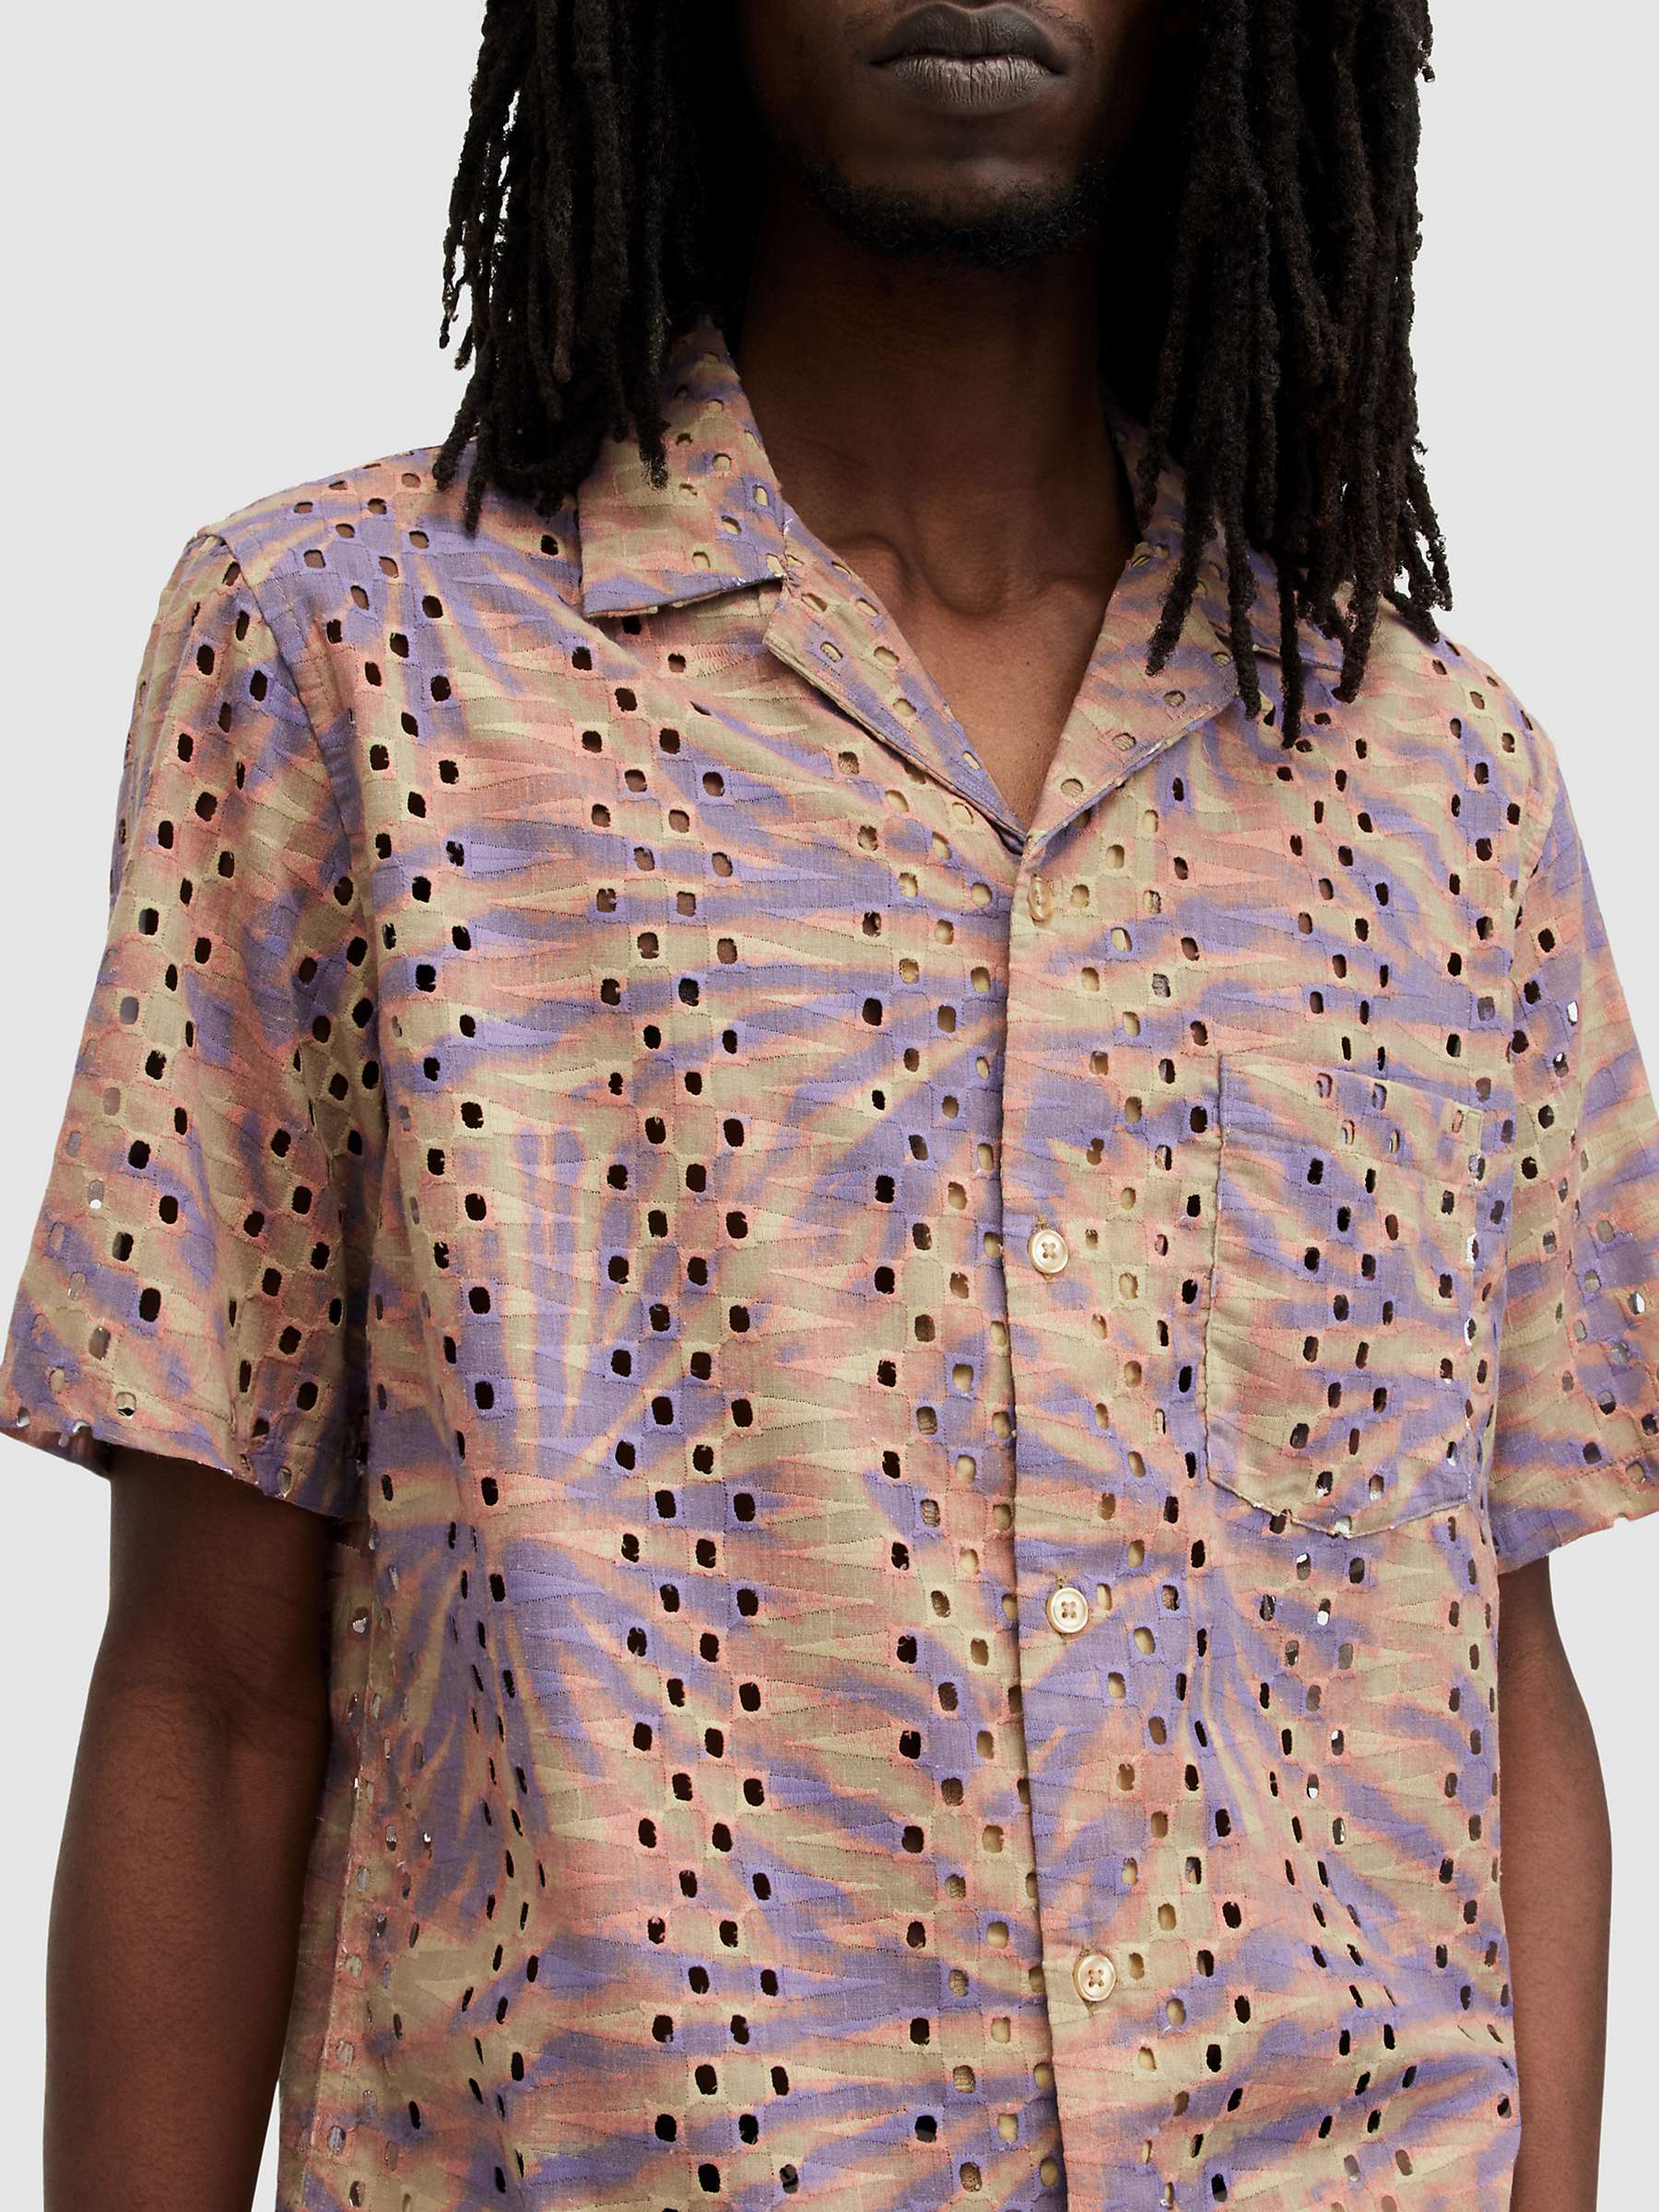 Buy AllSaints Yucca Short Sleeve Shirt, Pastel/Multi Online at johnlewis.com